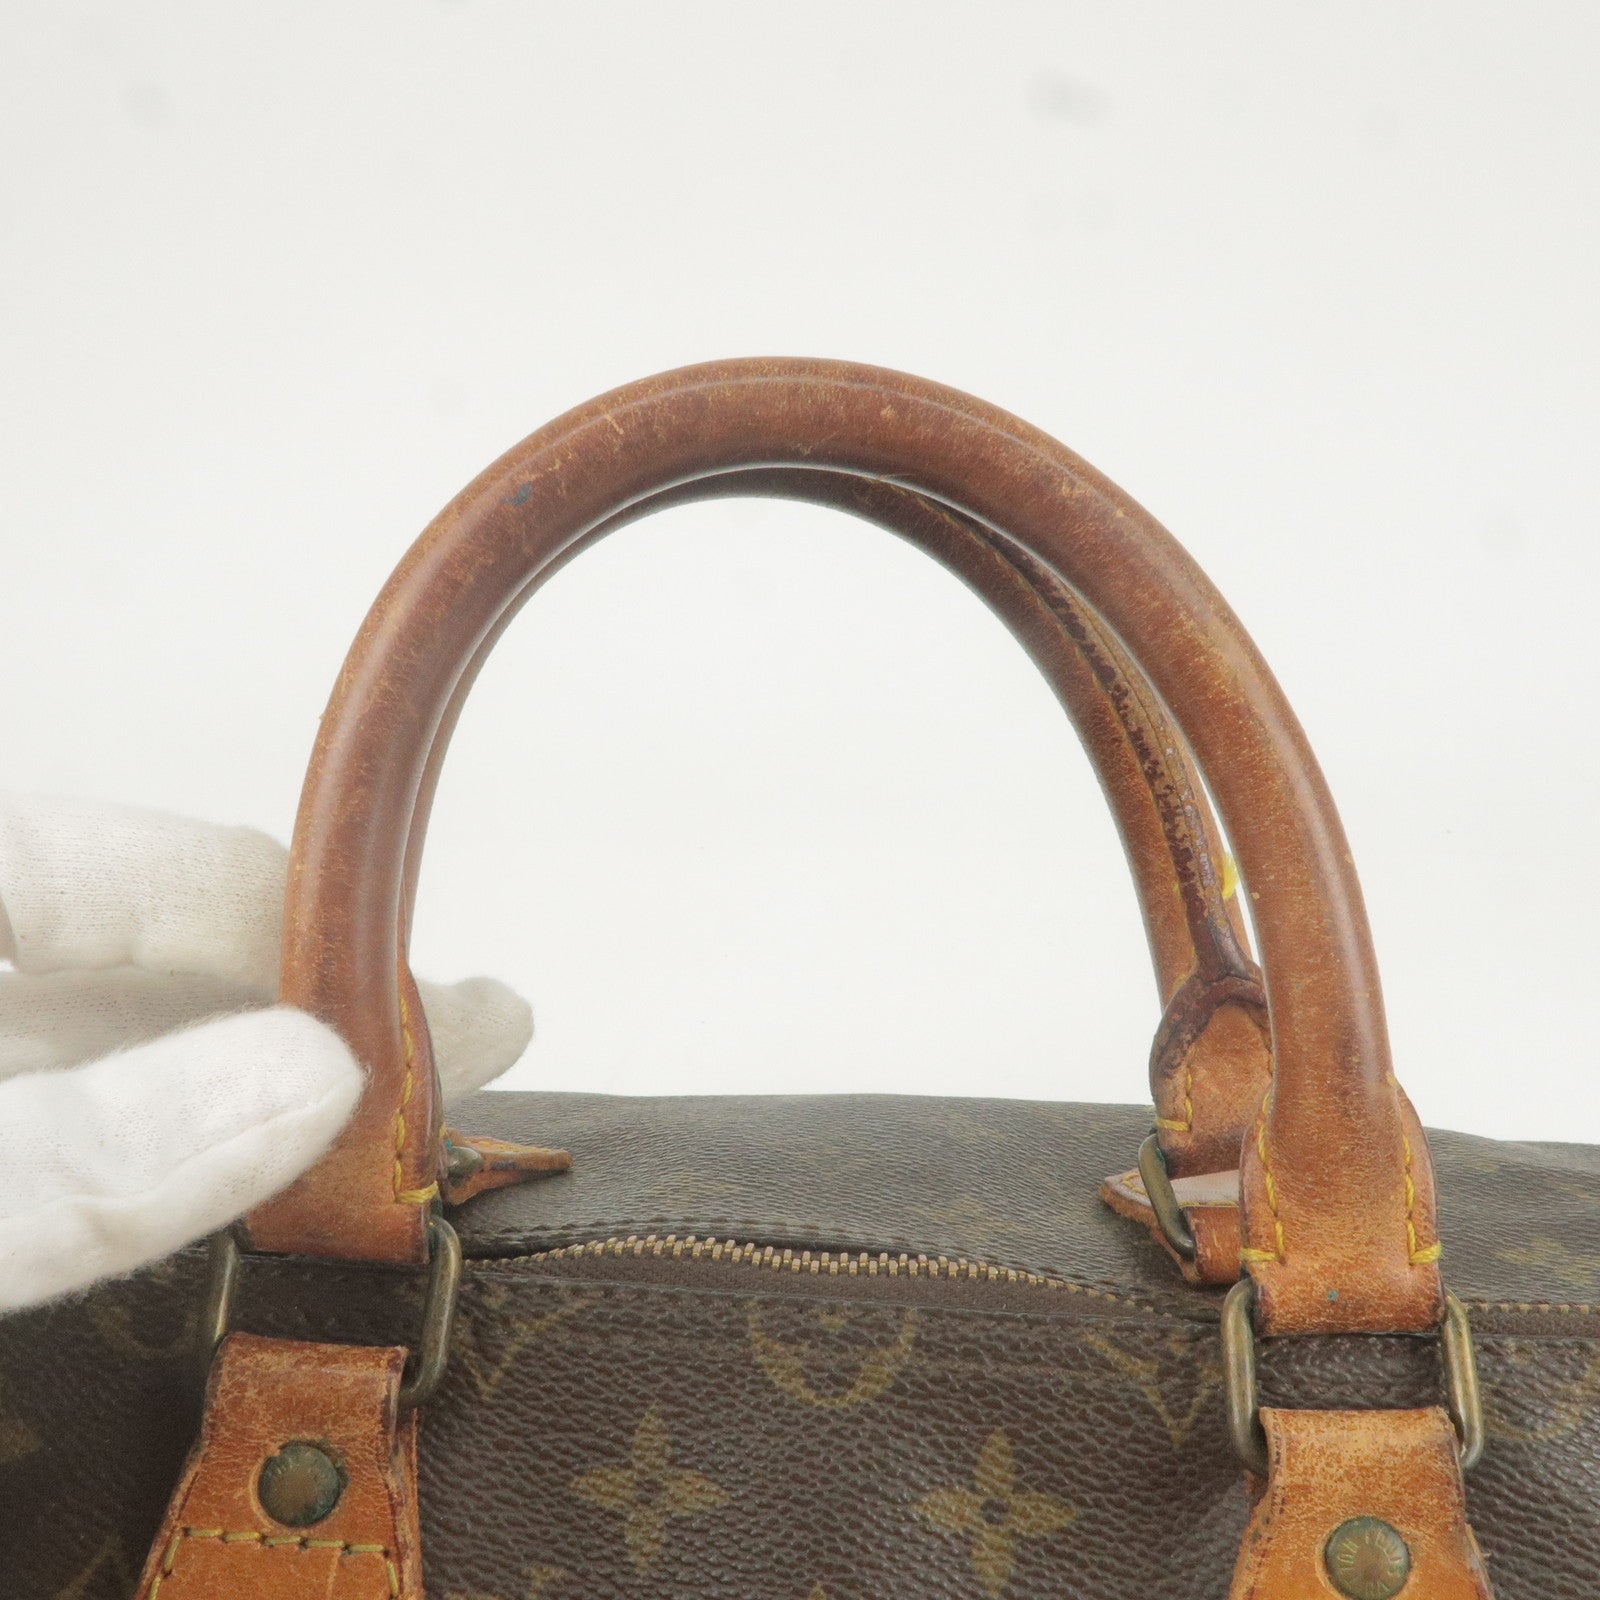 Louis Vuitton Speedy 35 Brown Canvas Handbag (Pre-Owned)